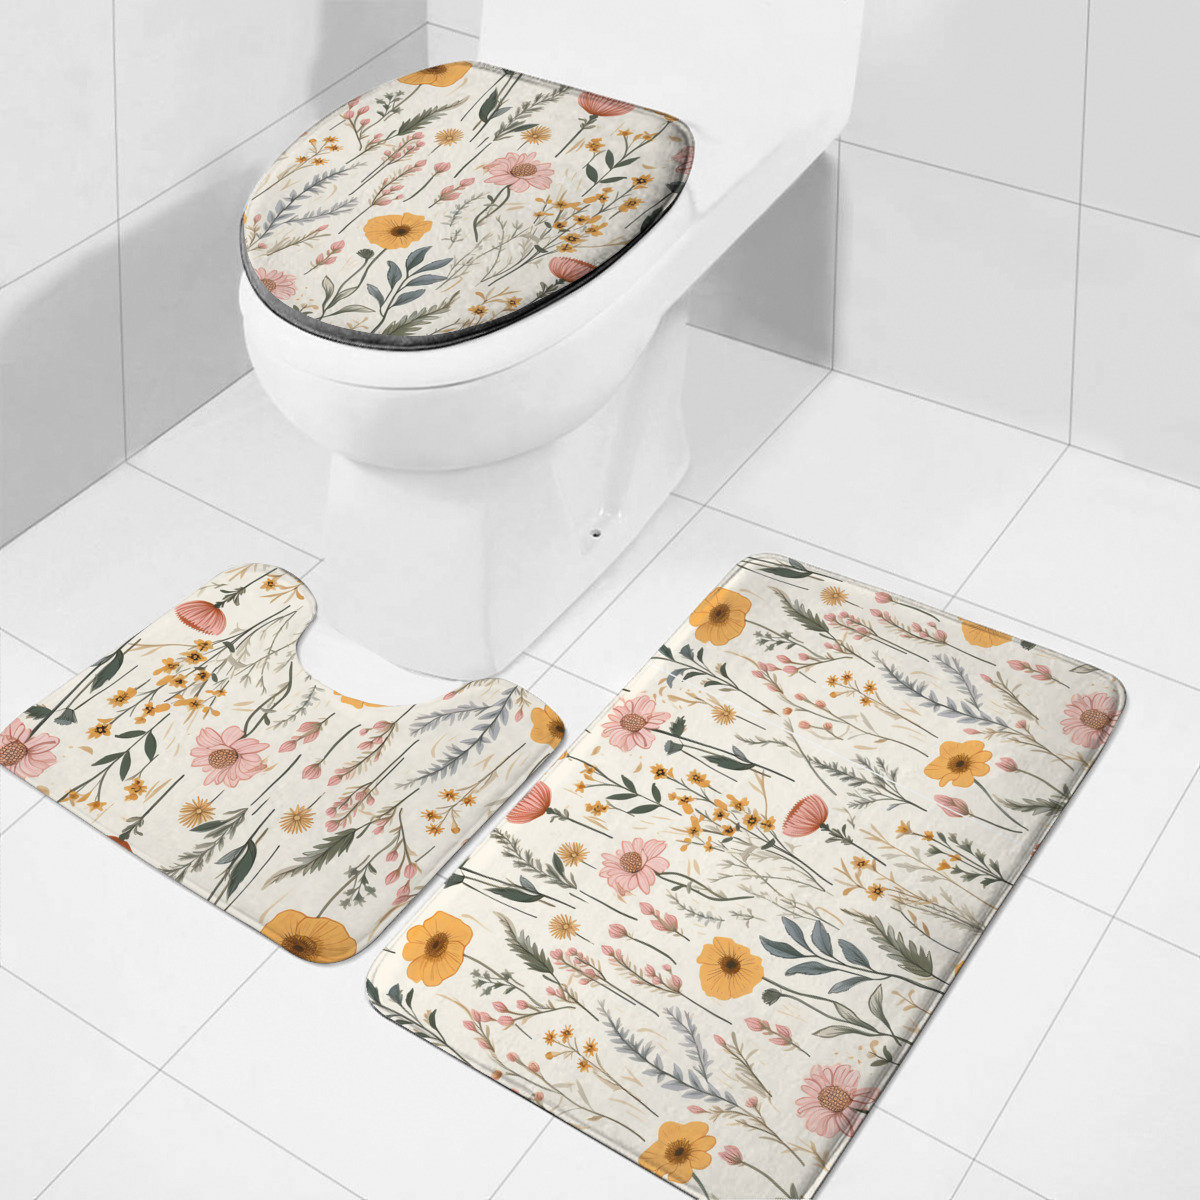 Boho Wildflowers Bathroom Toilet Lid Cover, Toilet Tank Cover, Toilet Floor Mat